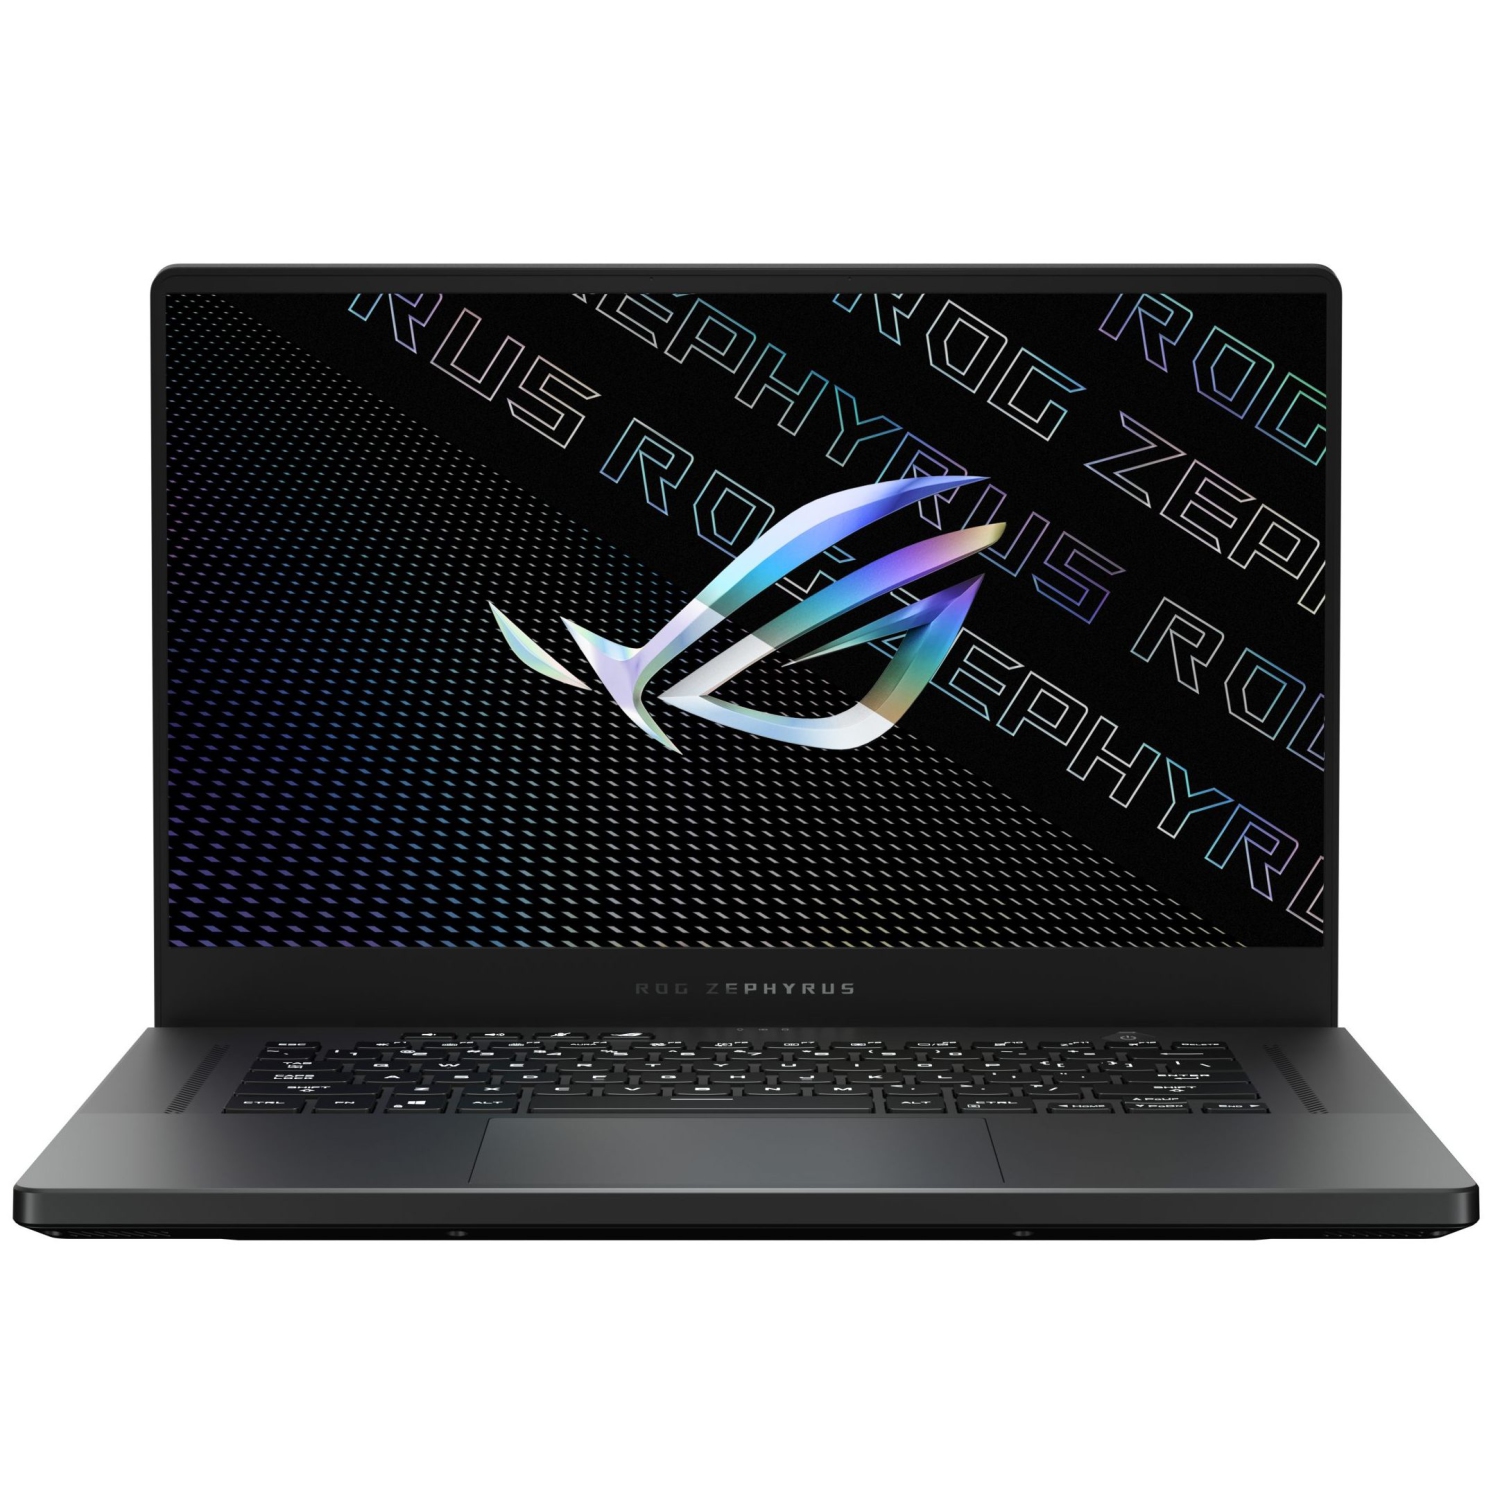 Custom ASUS ROG Zephyrus G15 Laptop (AMD Ryzen 9 5900HS, 16GB RAM, 2TB m.2 SATA SSD, NVIDIA RTX 3070, Win 10 Home)